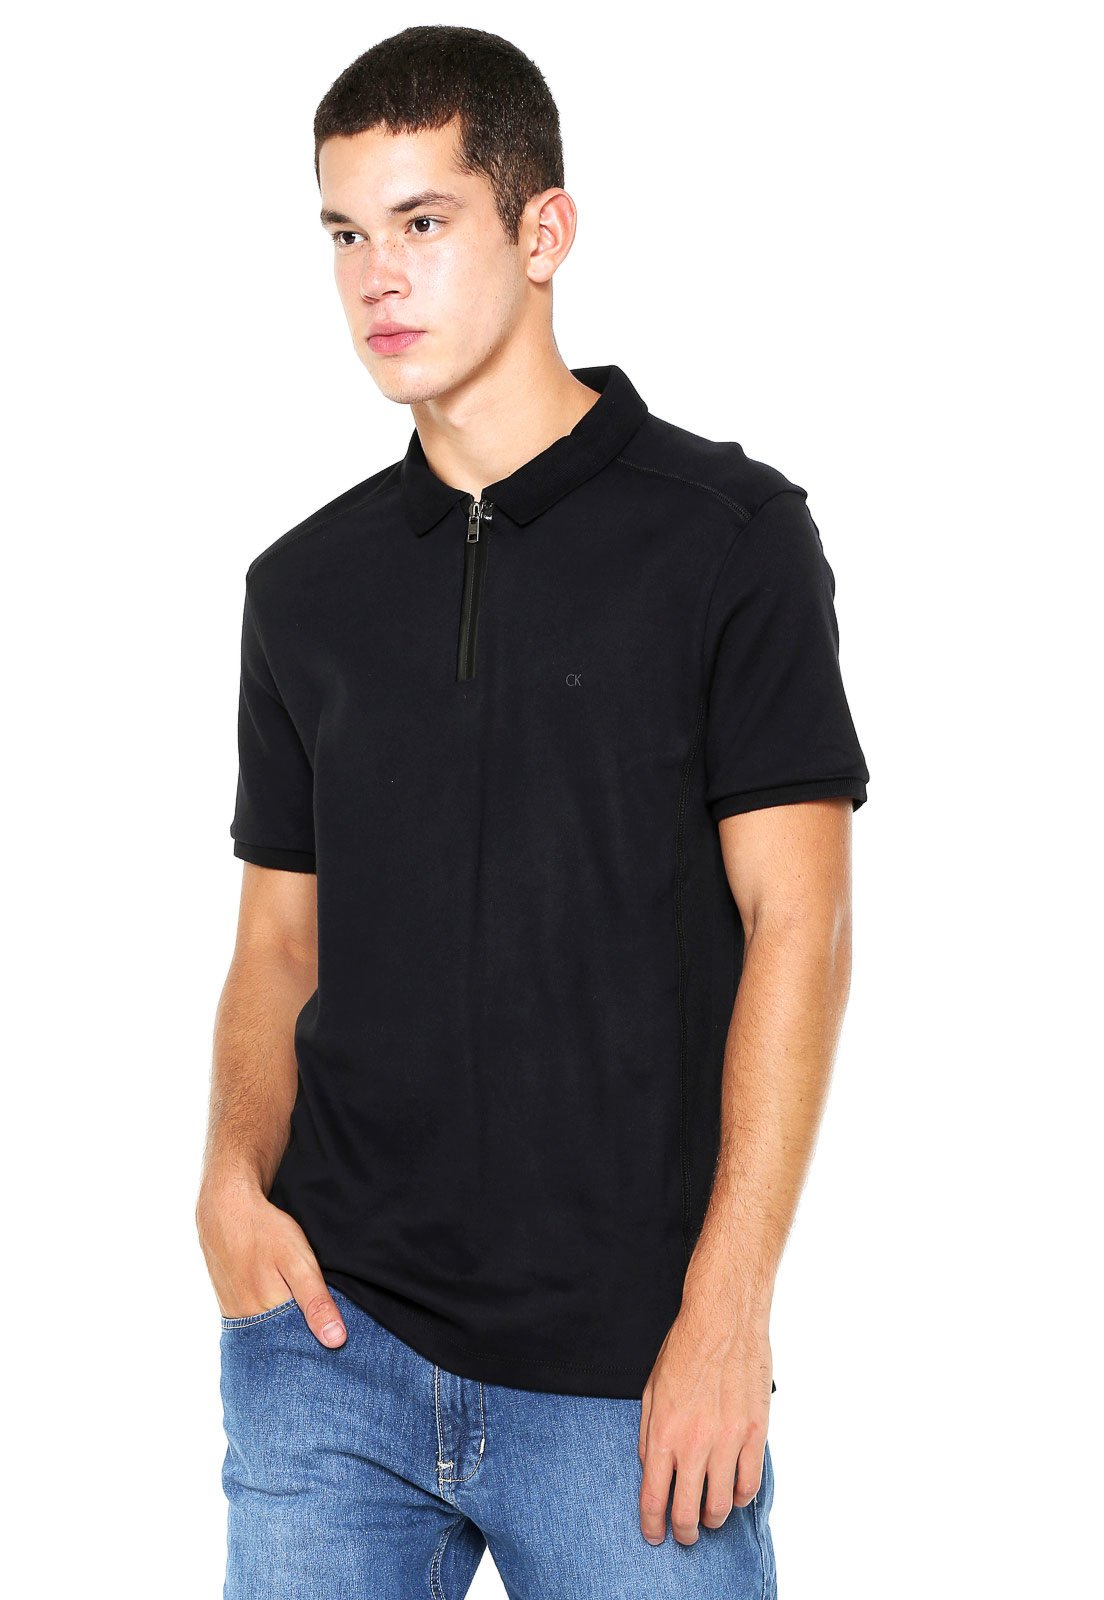 Calvin Klein Camisa masculina esportiva com zíper 1/4, Grey